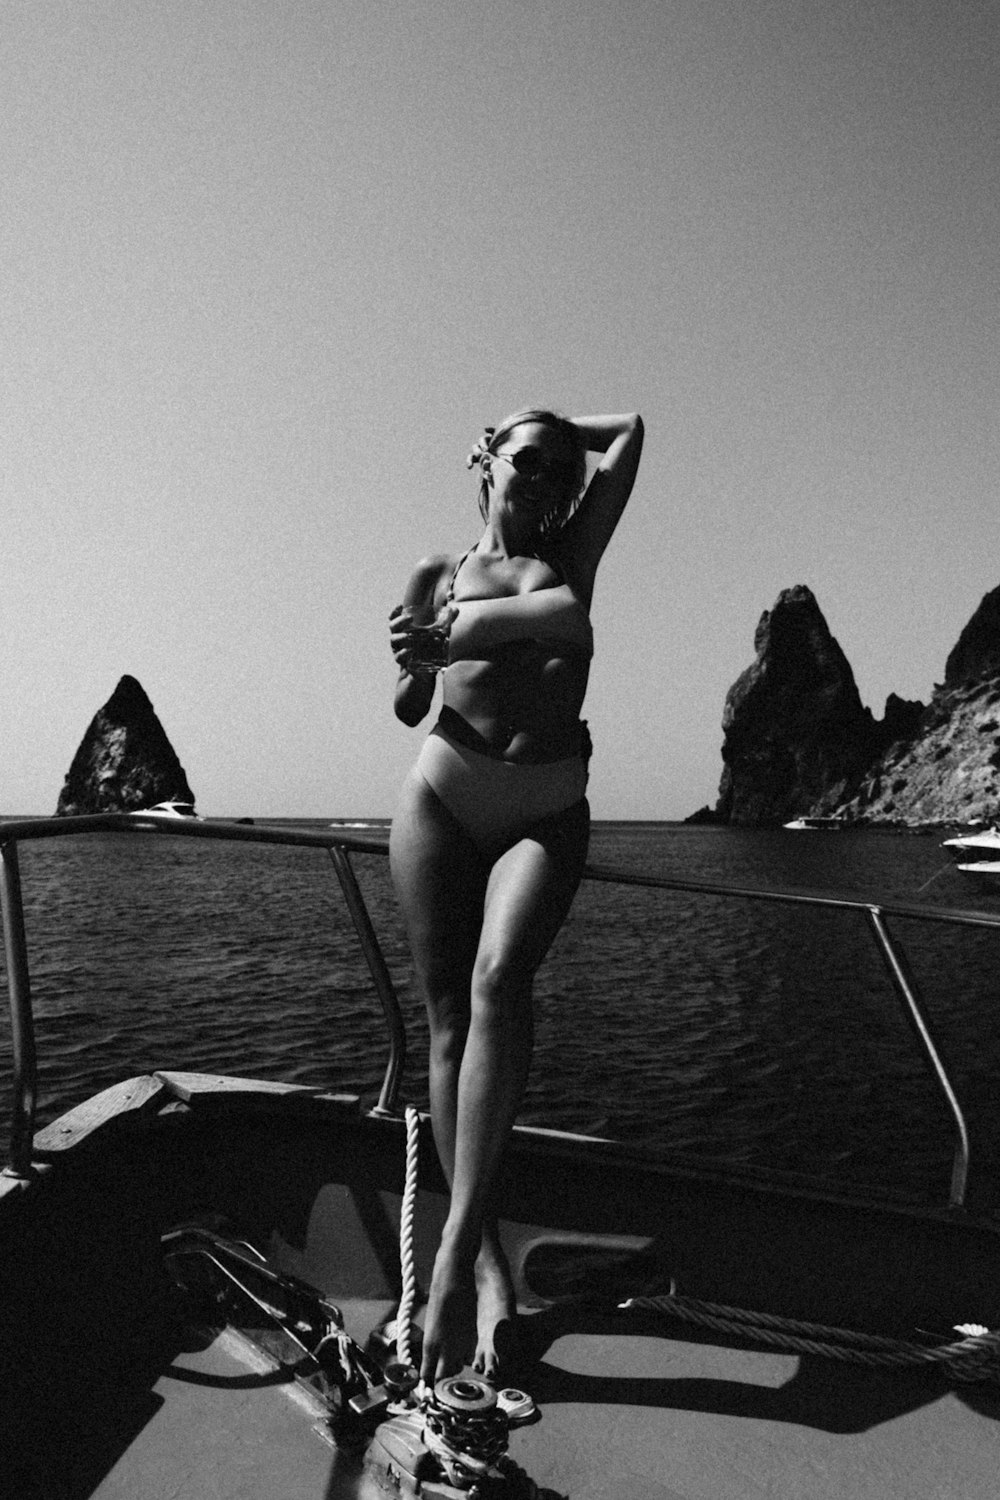 a woman in a bikini standing on a boat